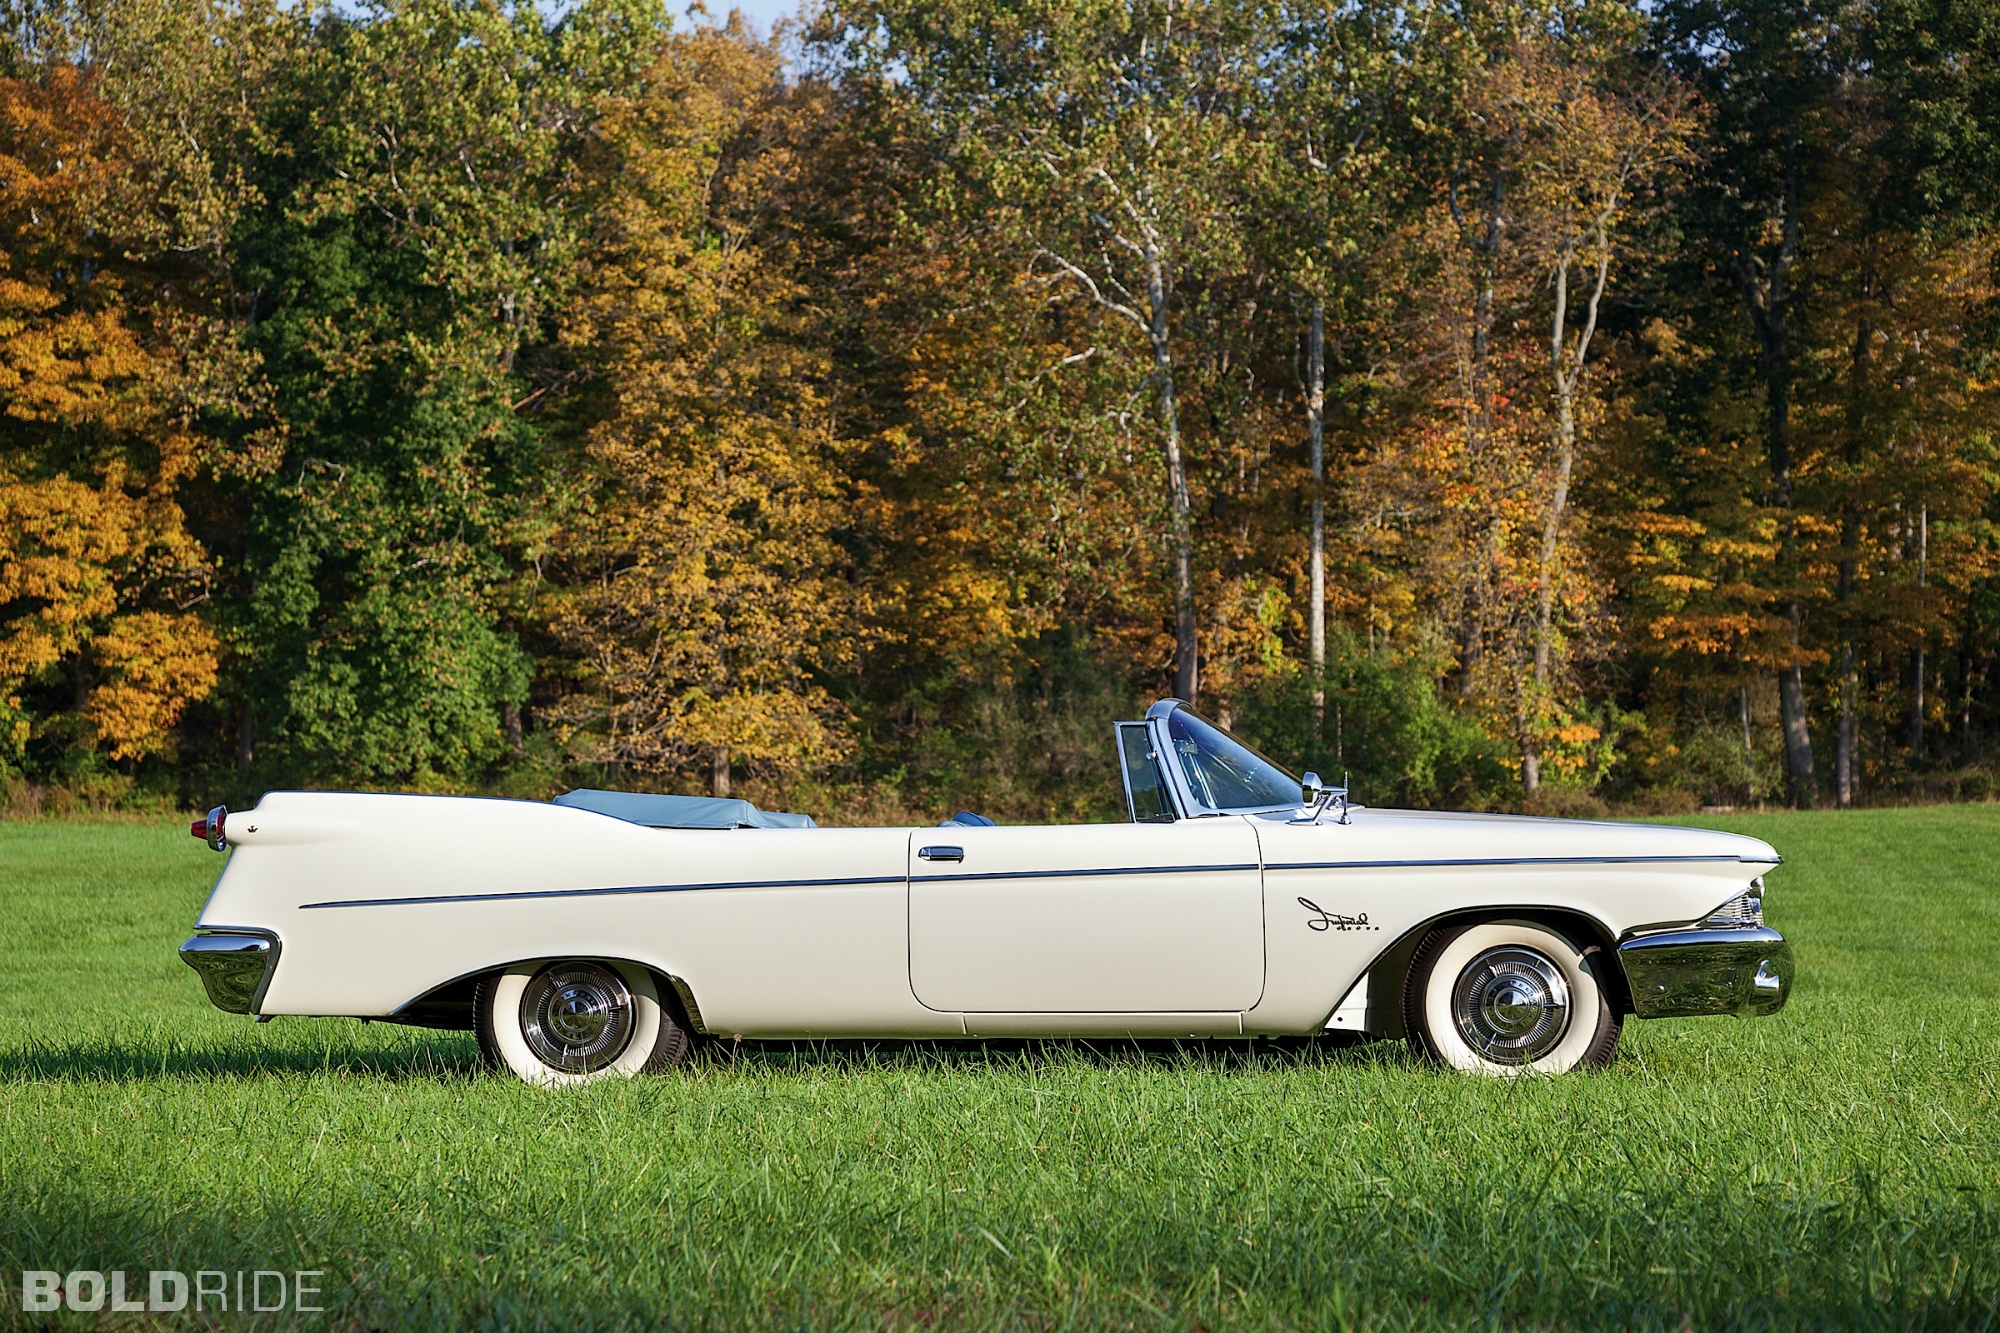 1960 Imperial Crown Cabriolet Boldride.com - Photos, Fonds d'écran